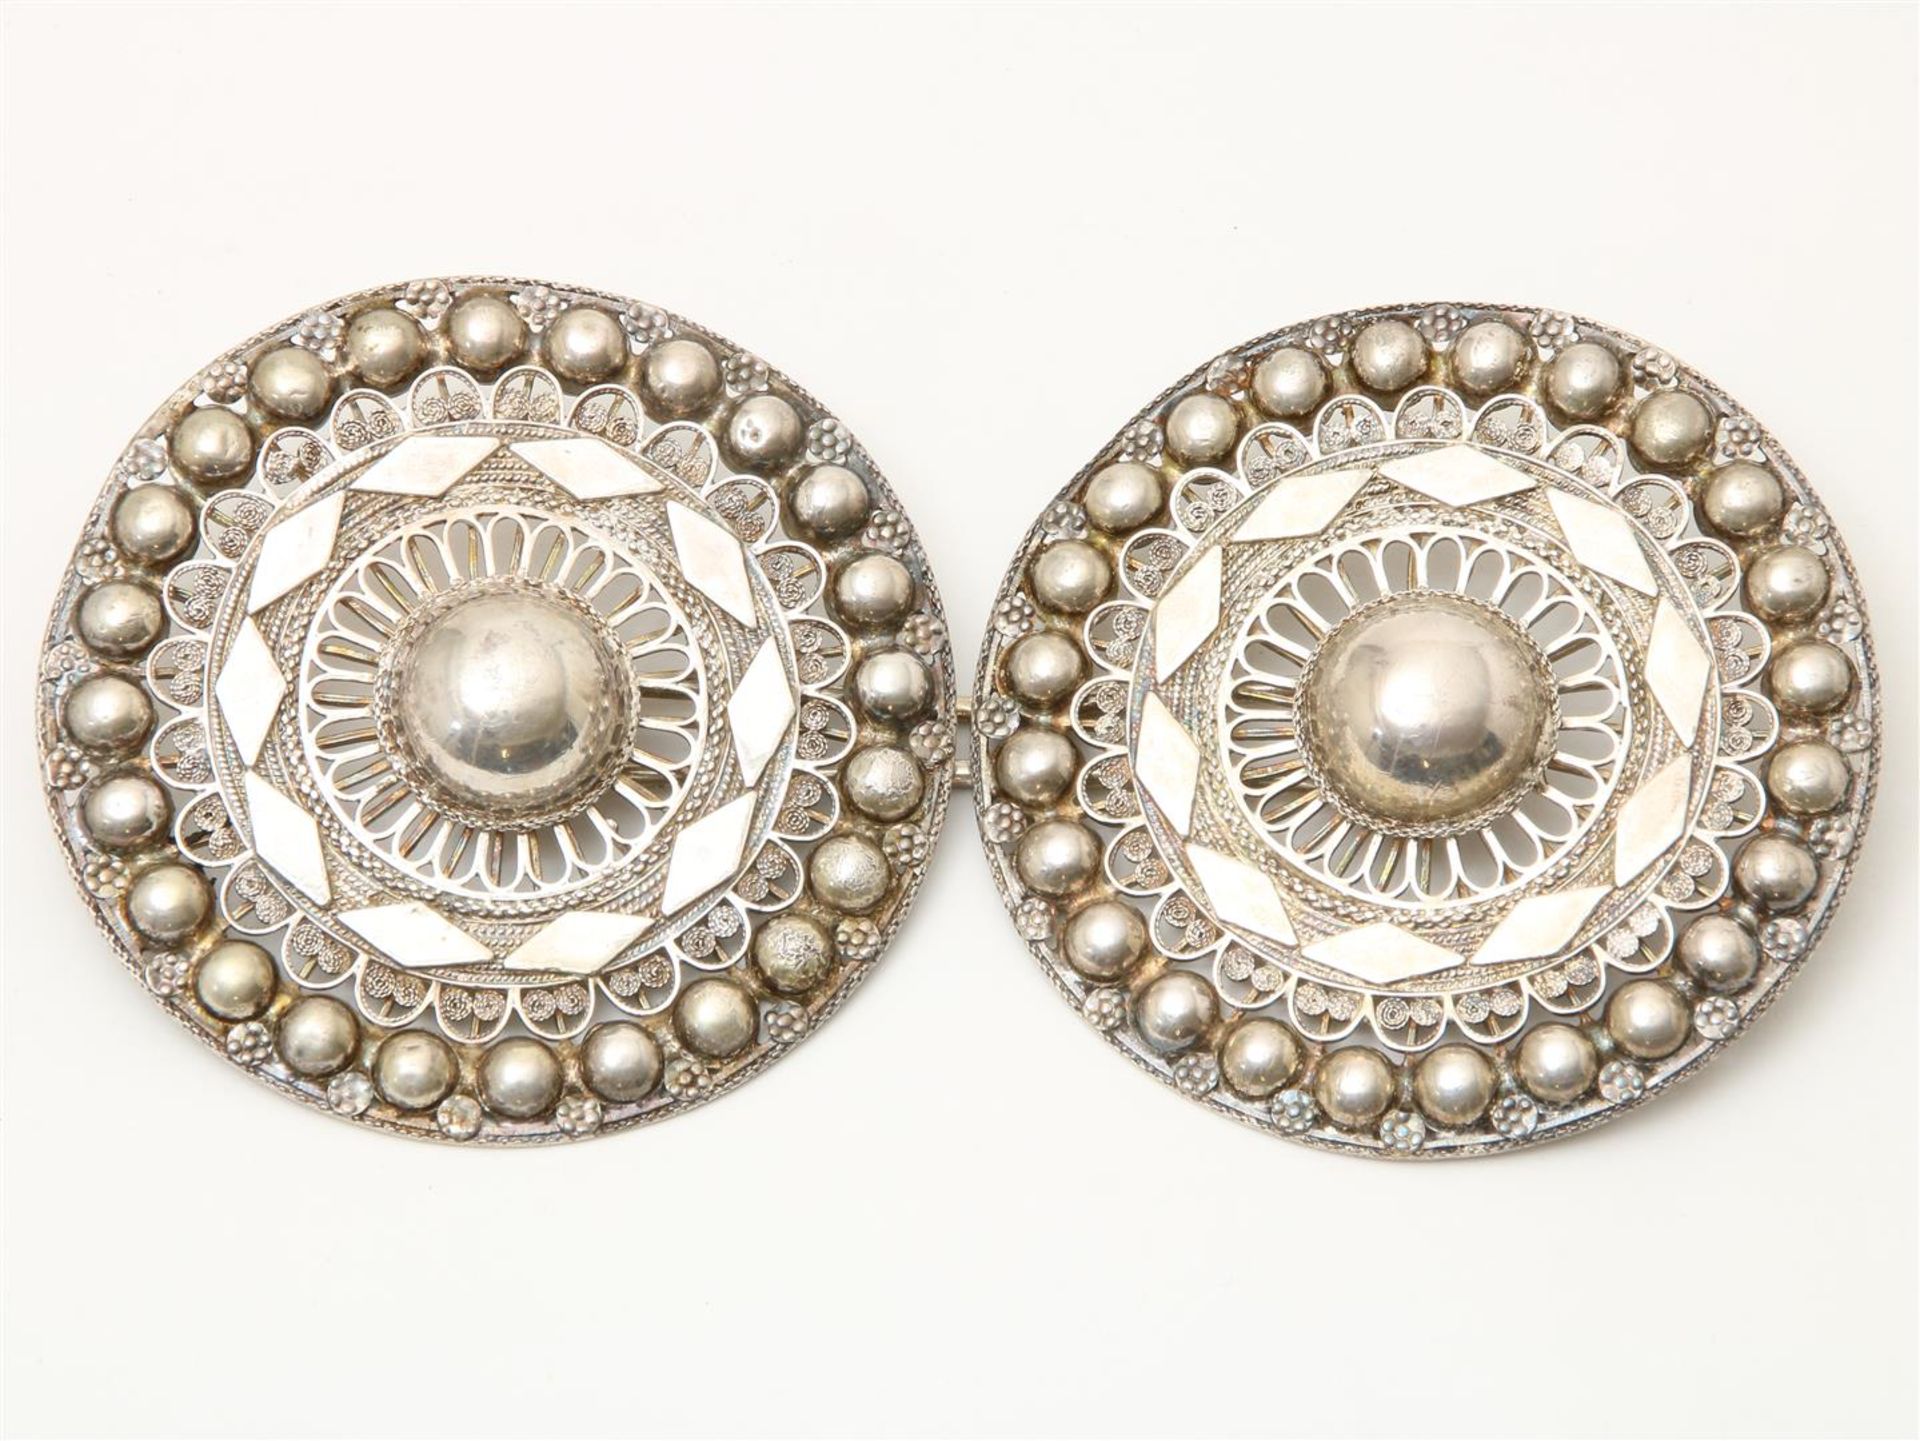 Silver trouser buttons, regional jewellery, 1902